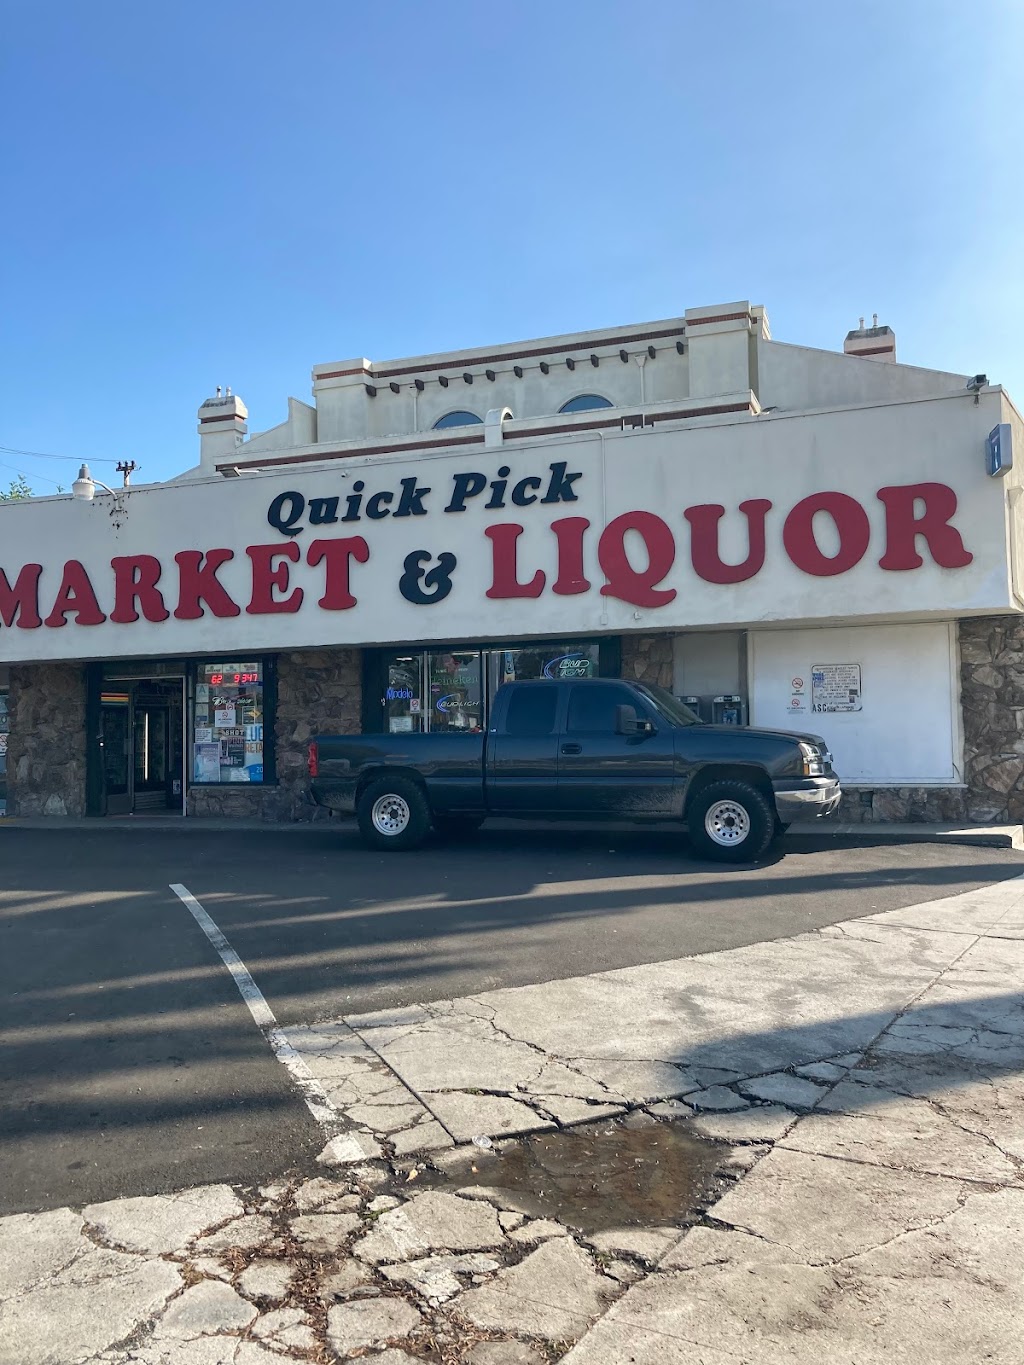 Quick Pick Market & Liquor | 11708 Venice Blvd., Los Angeles, CA 90066 | Phone: (310) 397-6252